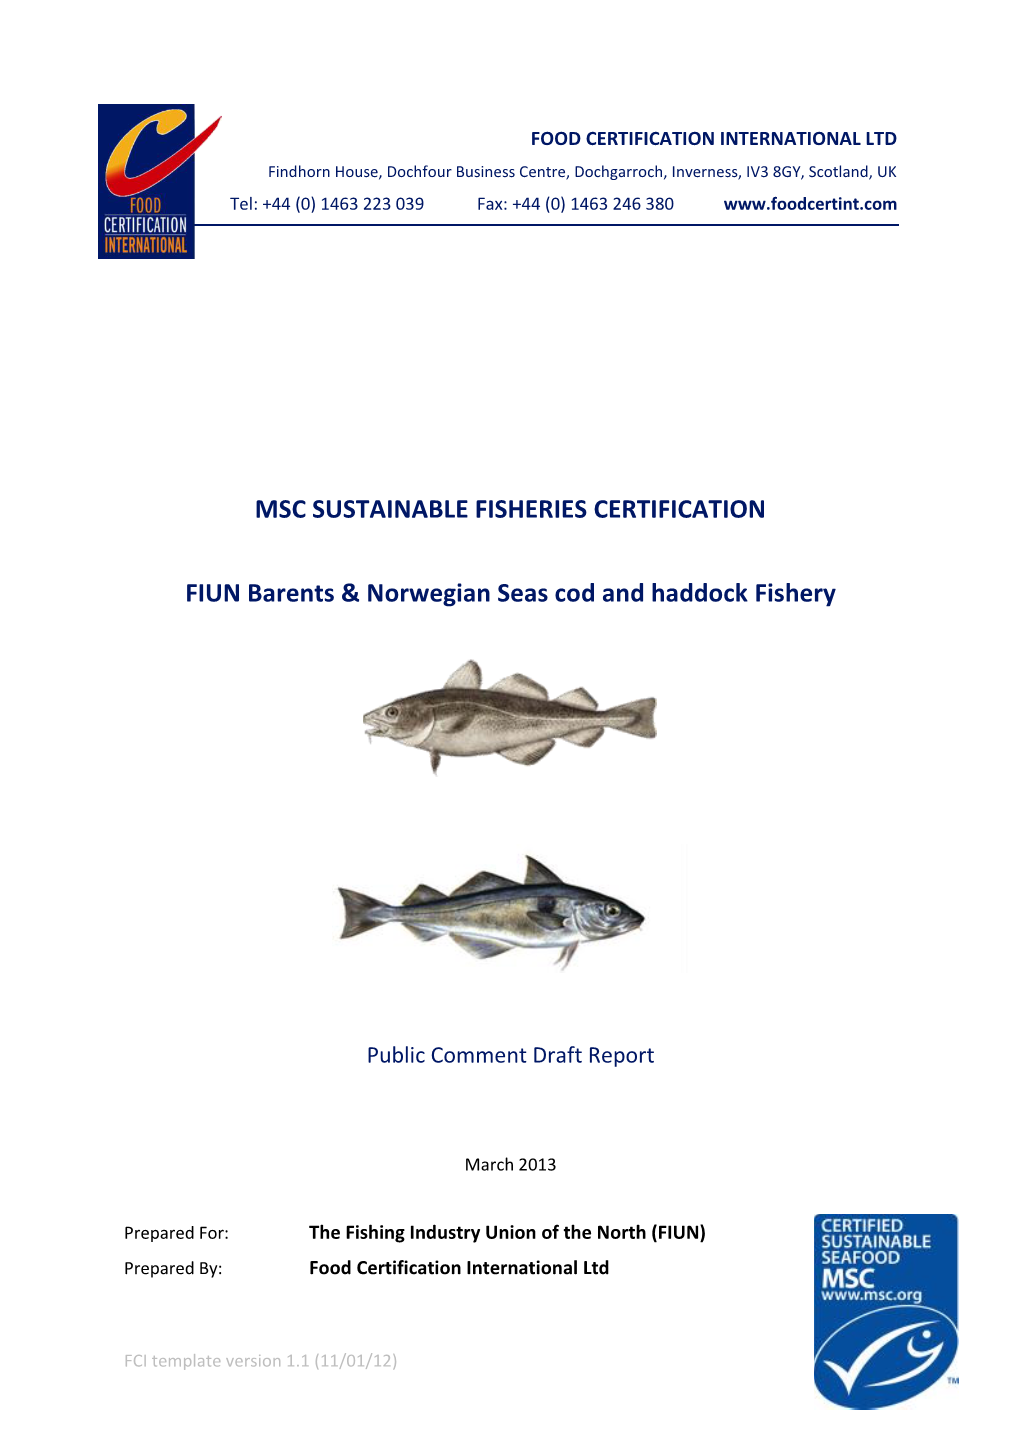 FIUN Barents & Norwegian Seas Cod and Haddock